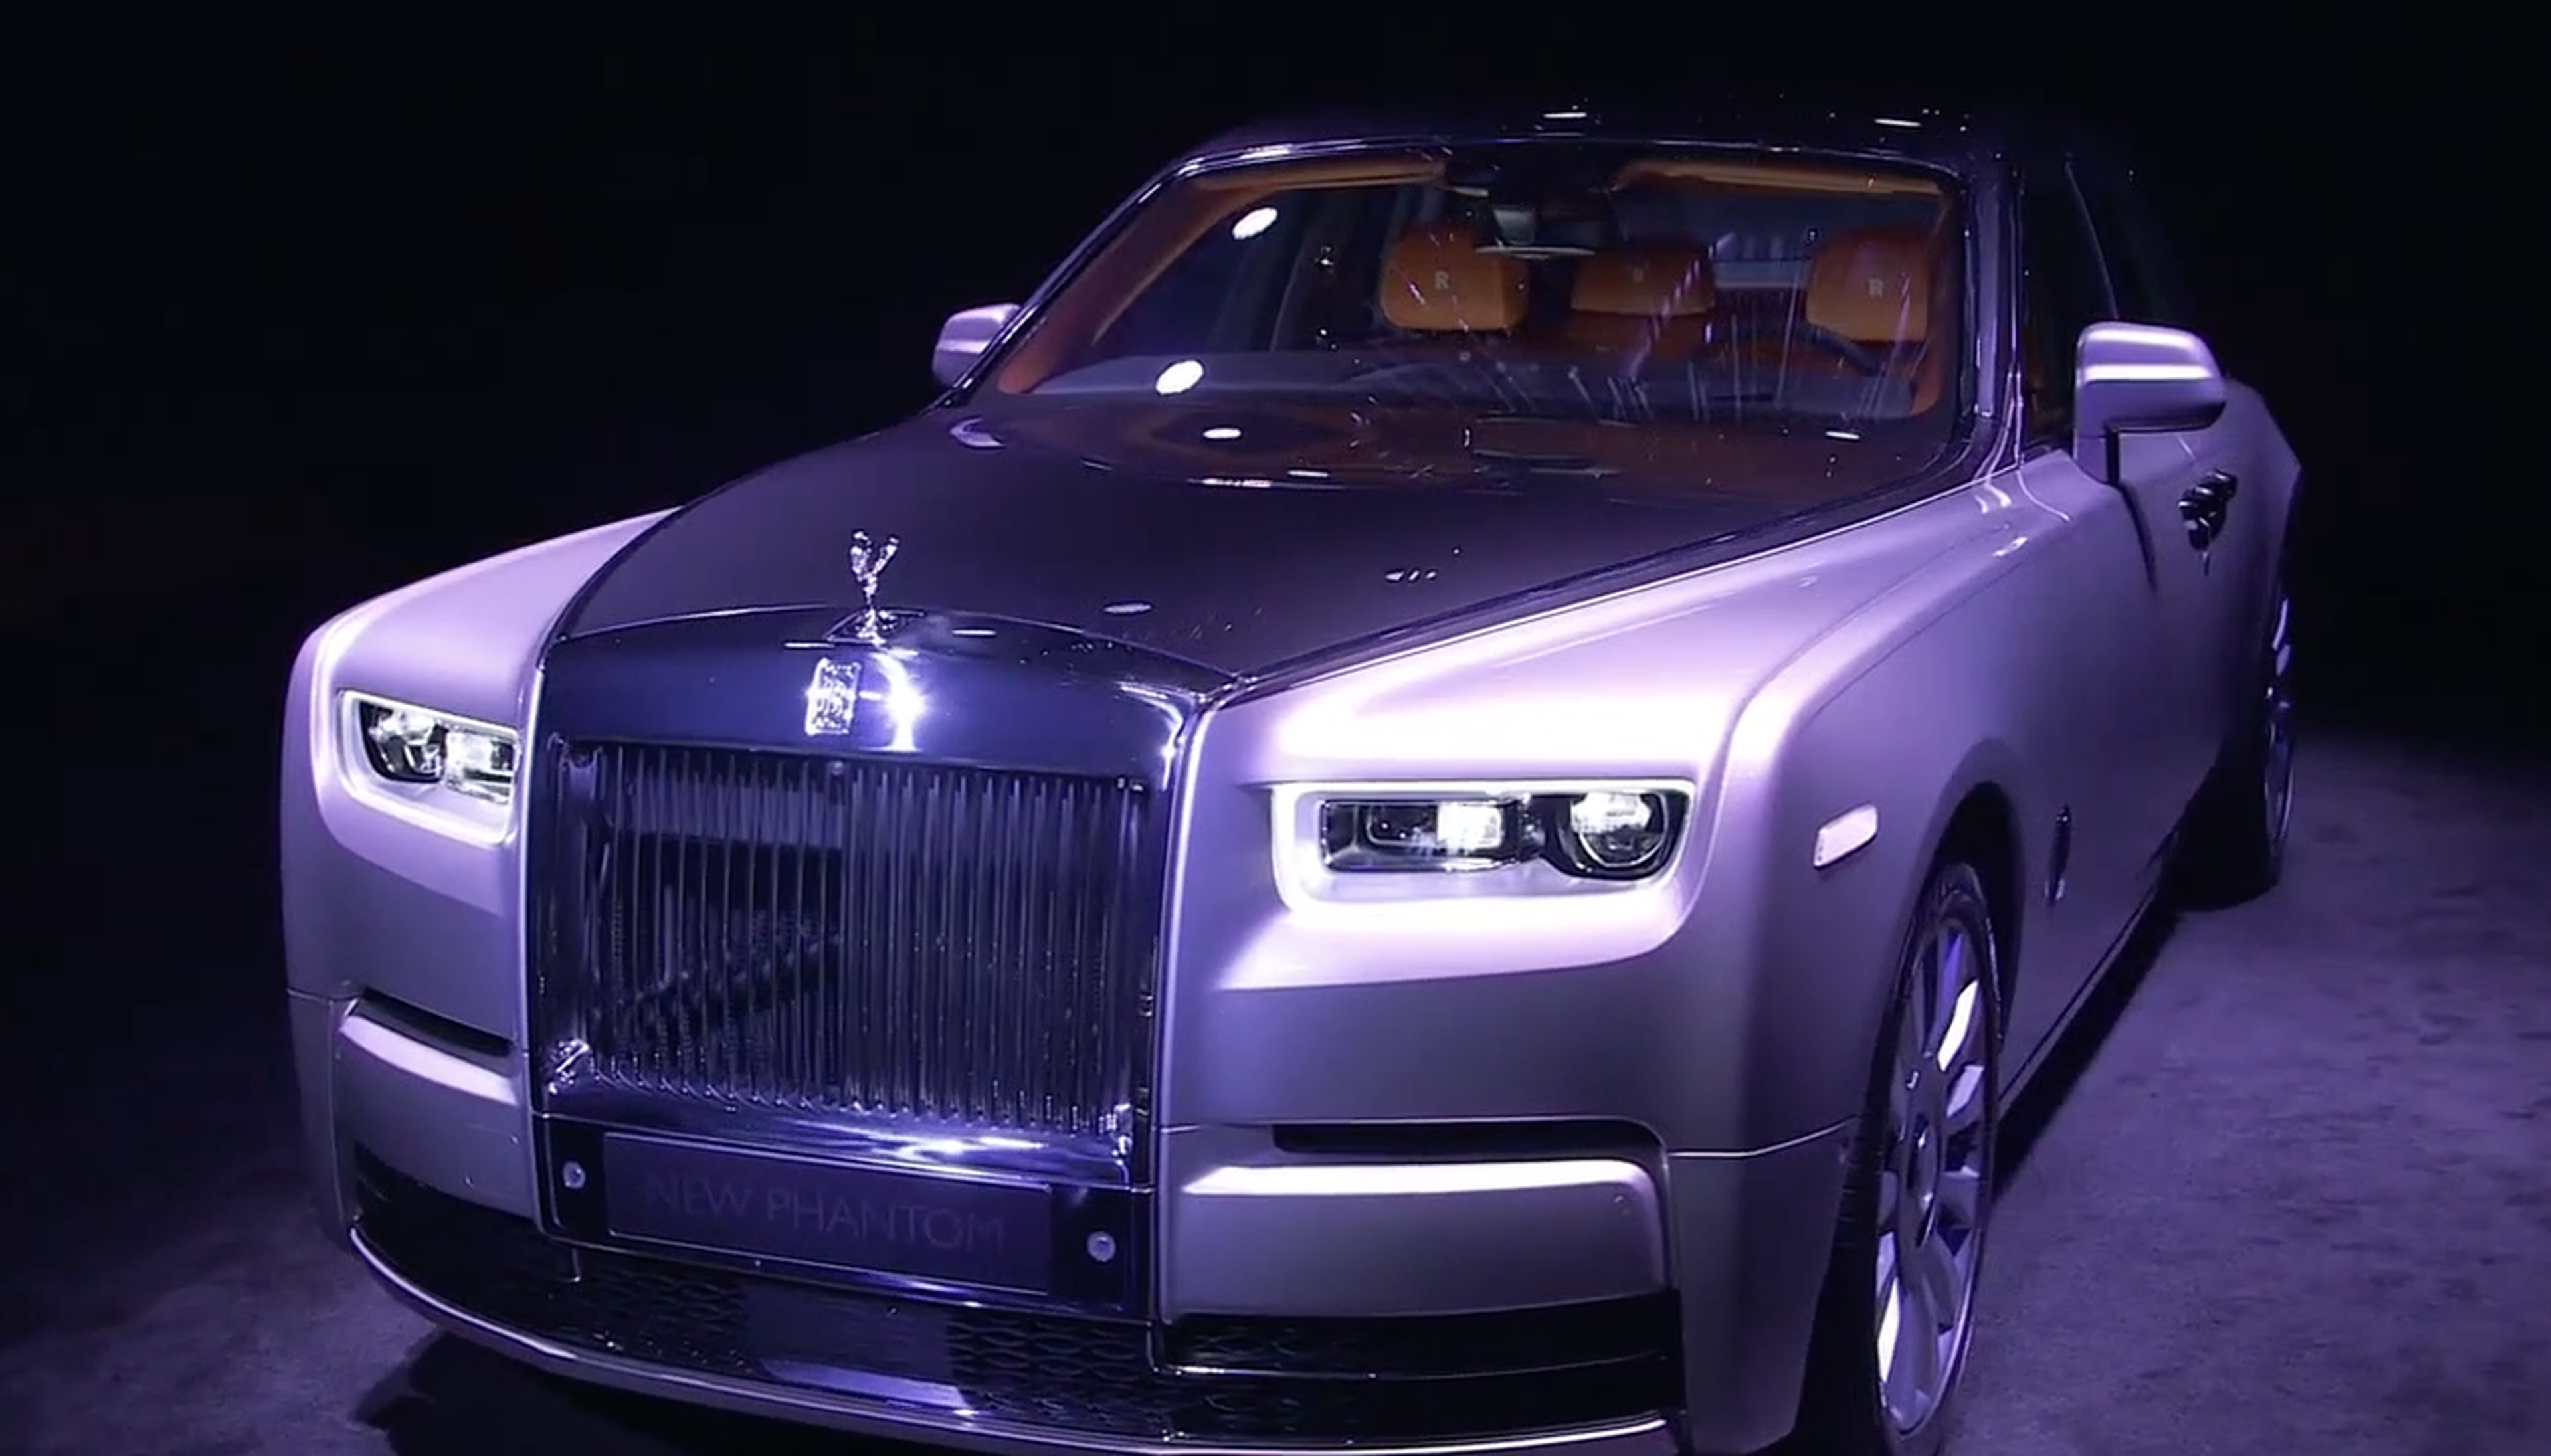 VÍDEO: Así revelaron el Rolls Royce Phantom, no podía ser de otra manera